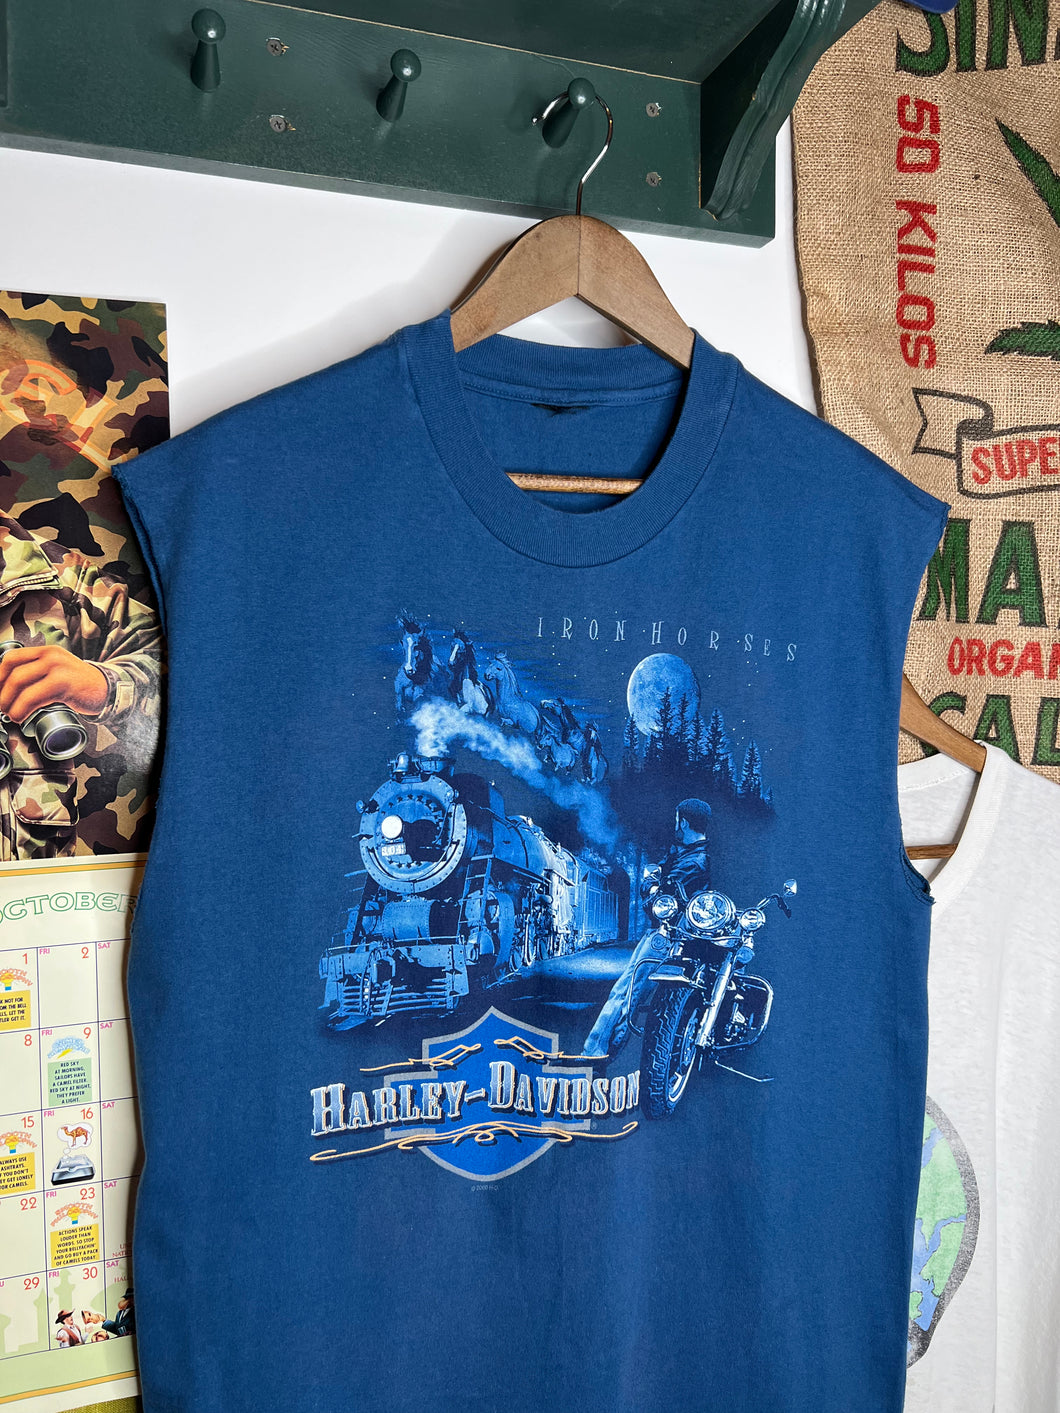 Vintage 2000 Harley Iron Horses Cutoff Shirt (L)